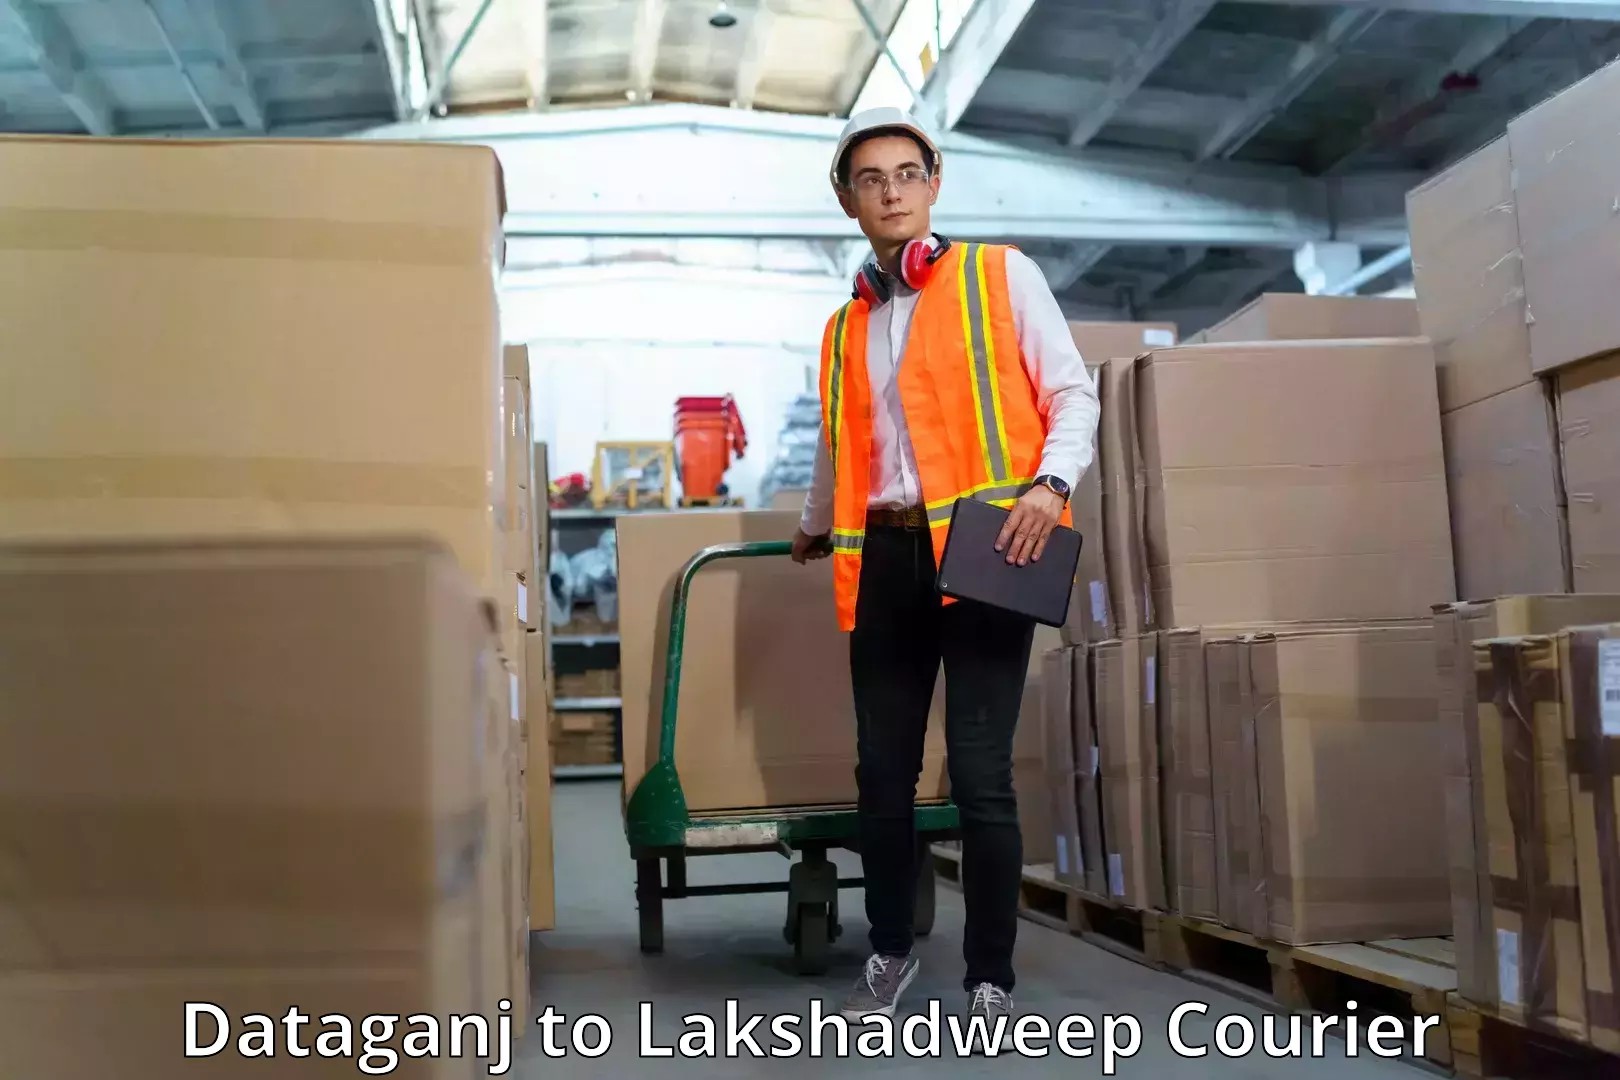 Doorstep delivery service Dataganj to Lakshadweep